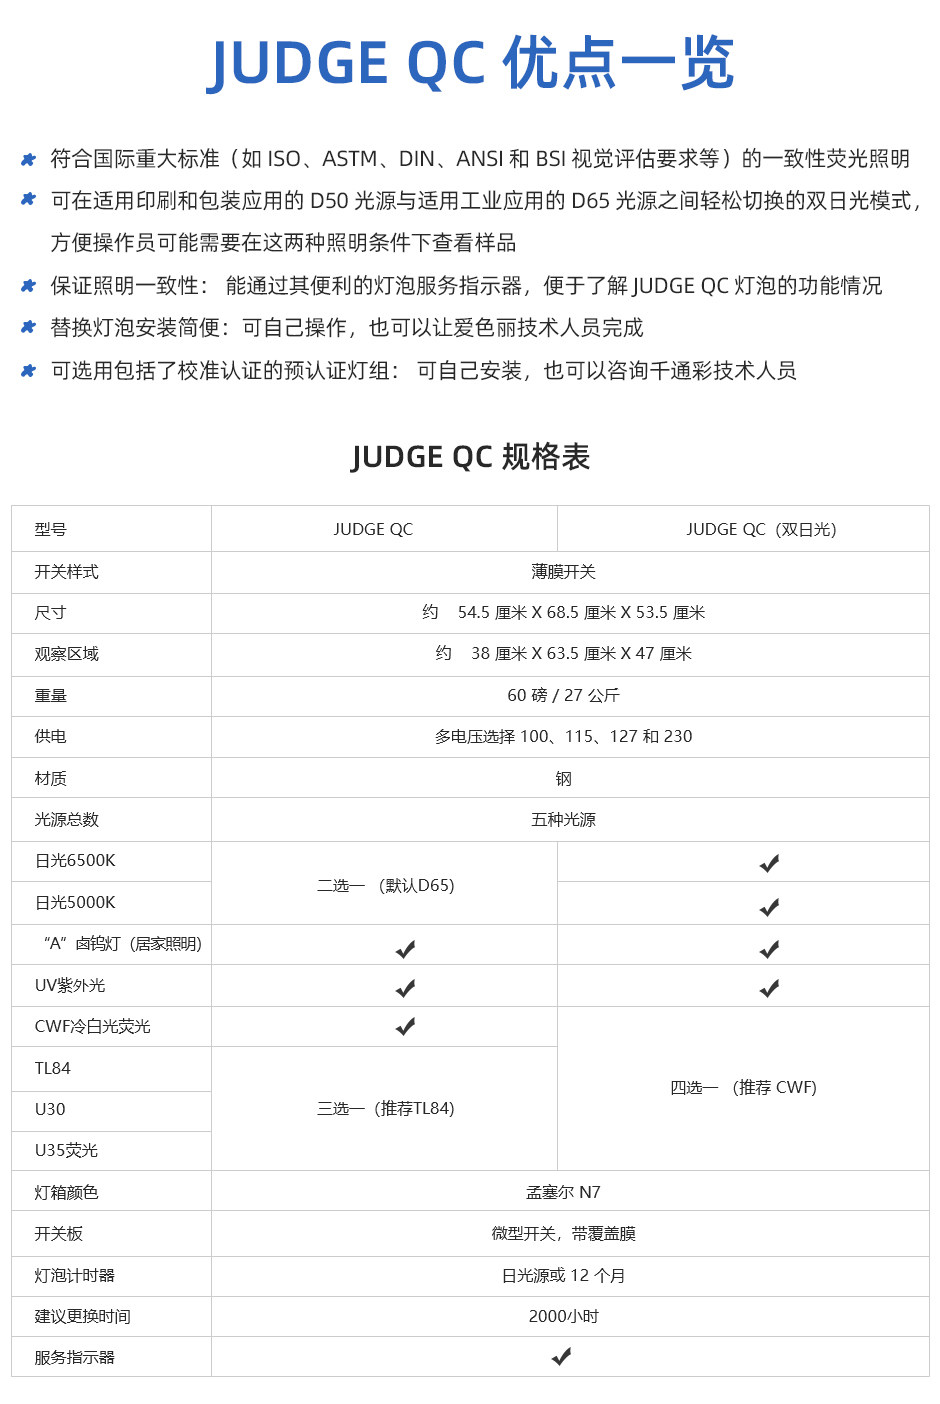 Judge-QC_02.jpg?x-oss-process=style/comp